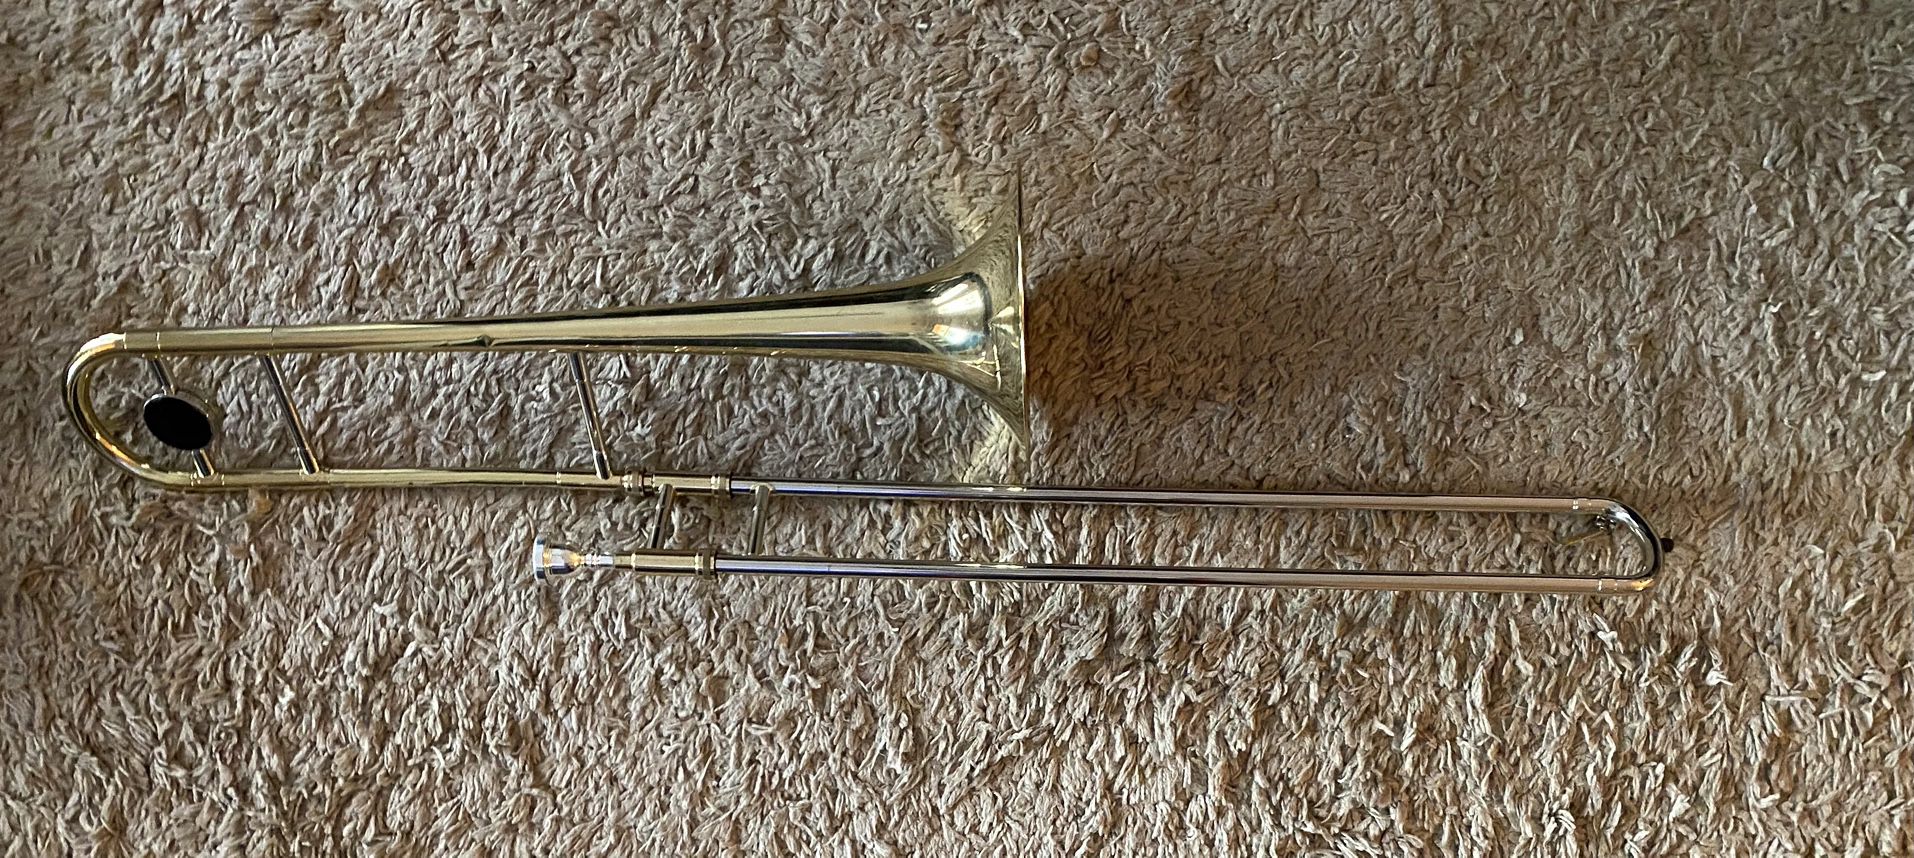 Trombone For Sale